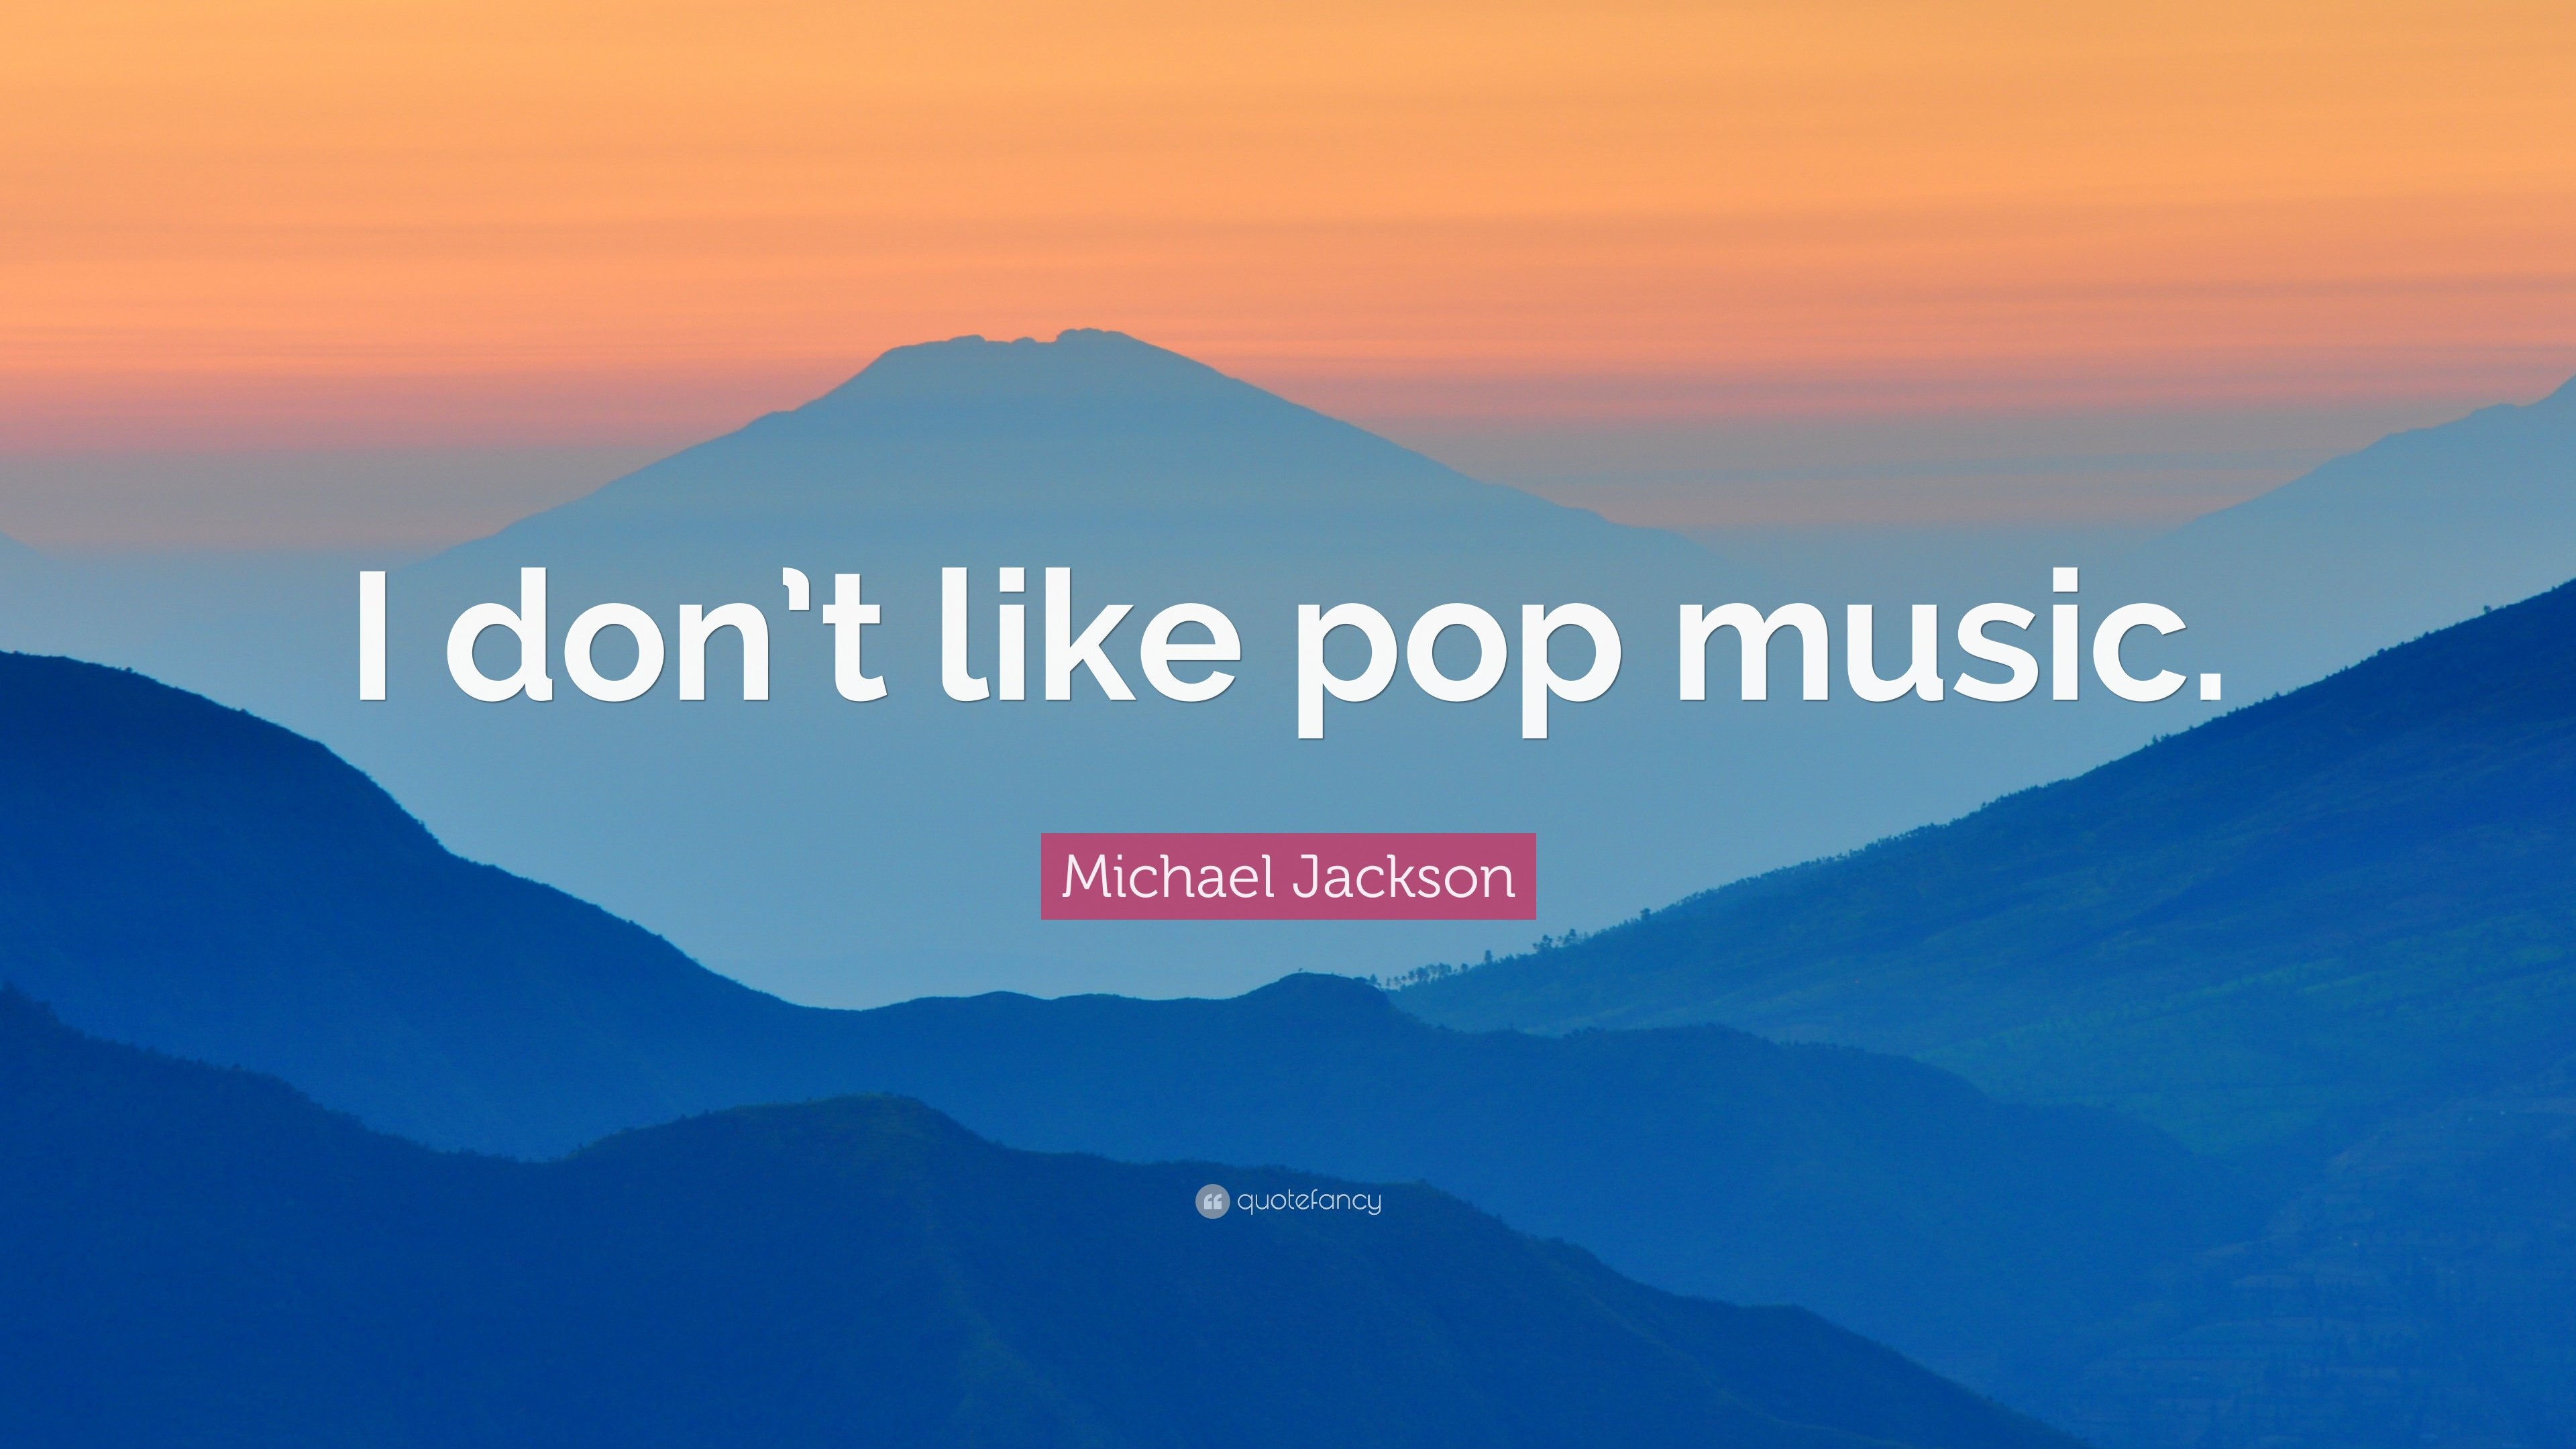 Michael Jackson Quote: “I don't like pop music.” 12 wallpaper